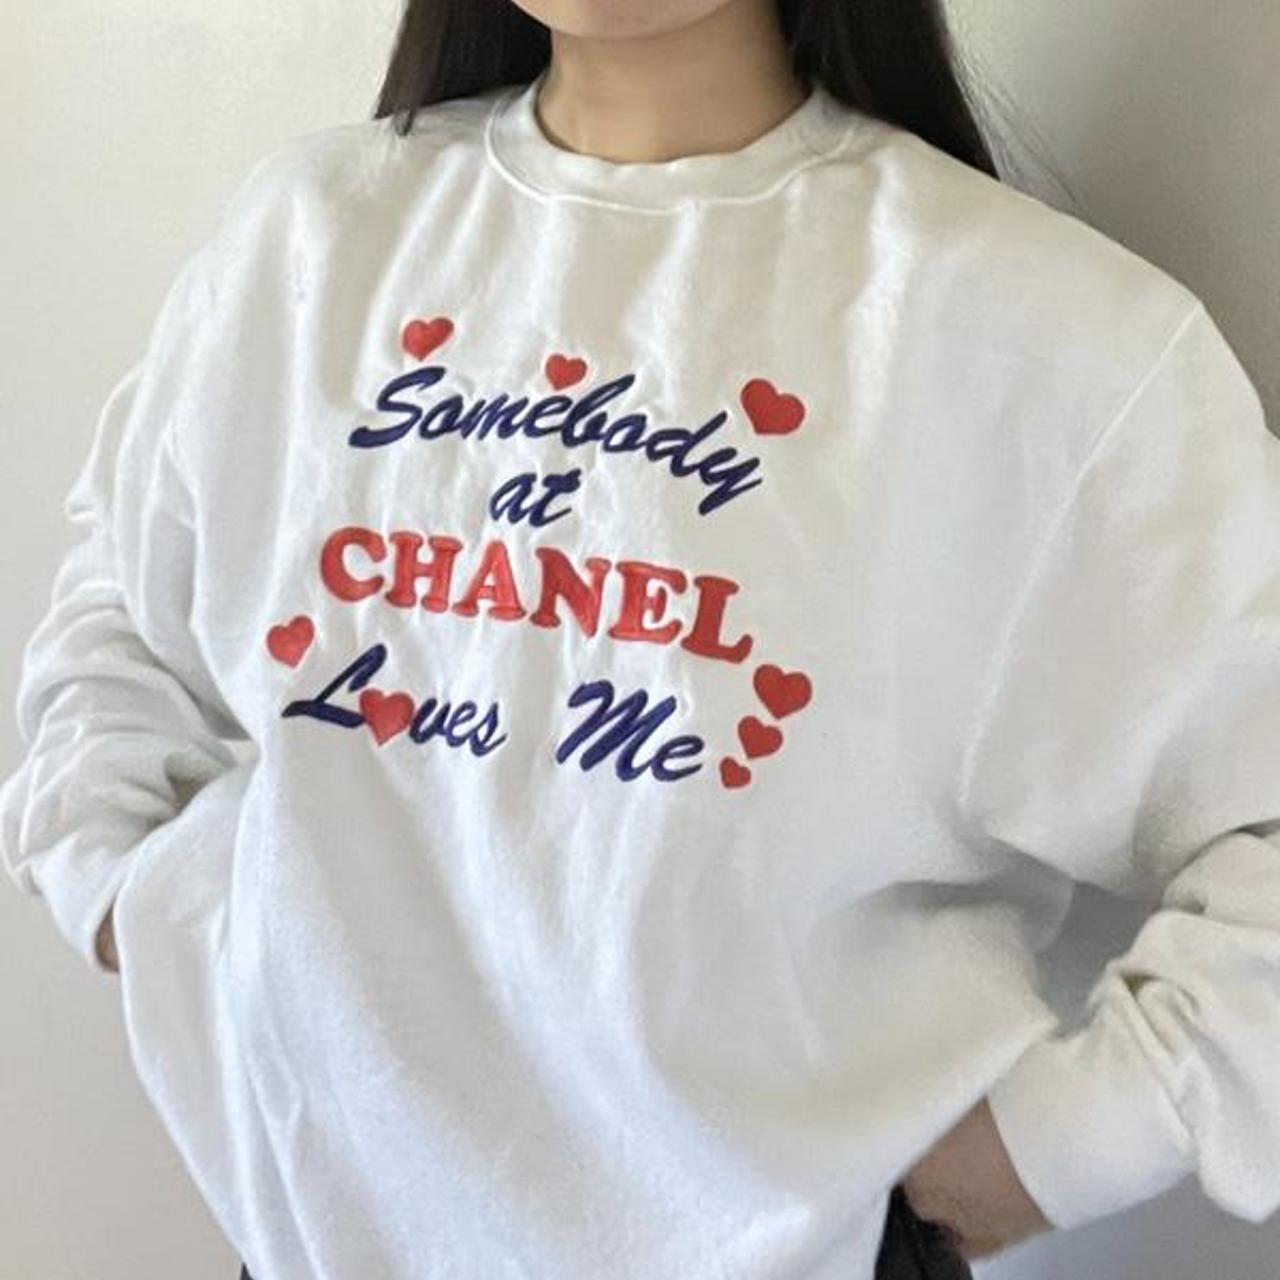 Chanel Women's White and Blue Sweatshirt